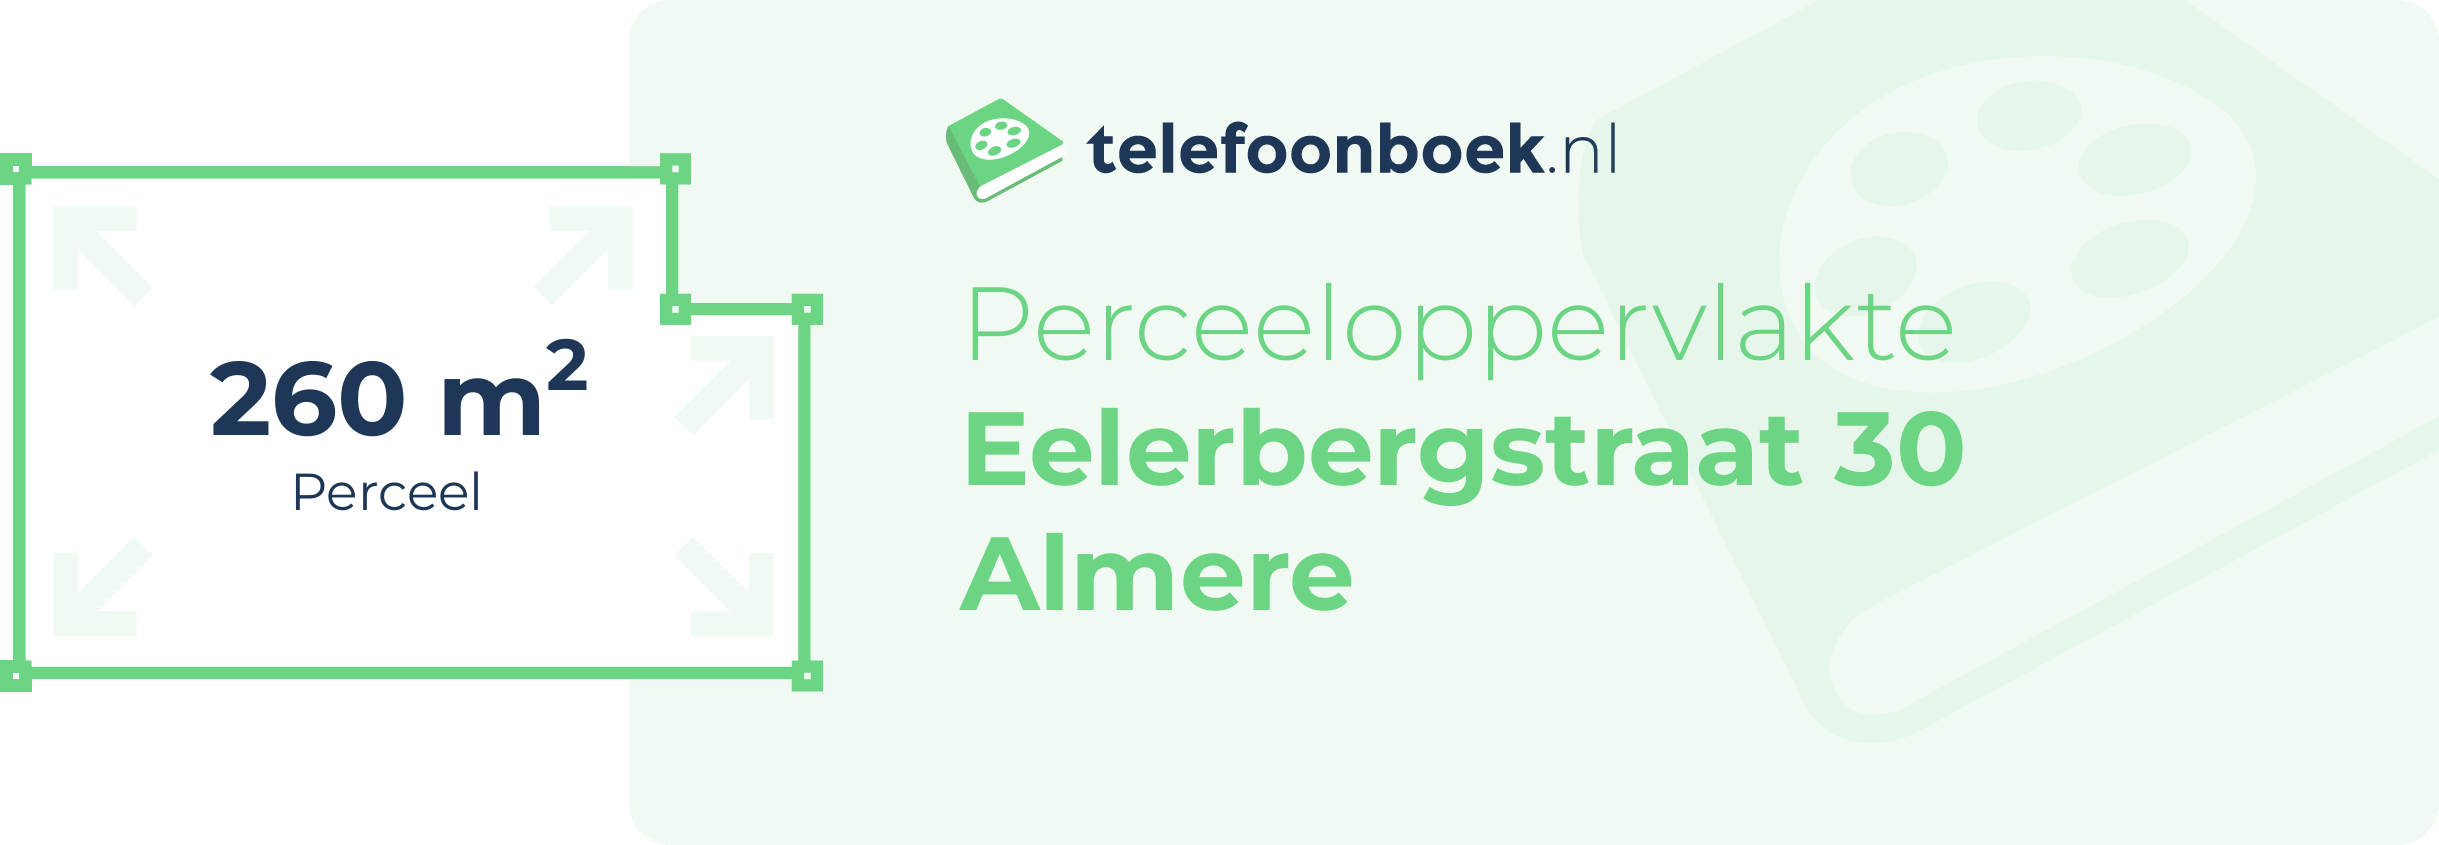 Perceeloppervlakte Eelerbergstraat 30 Almere